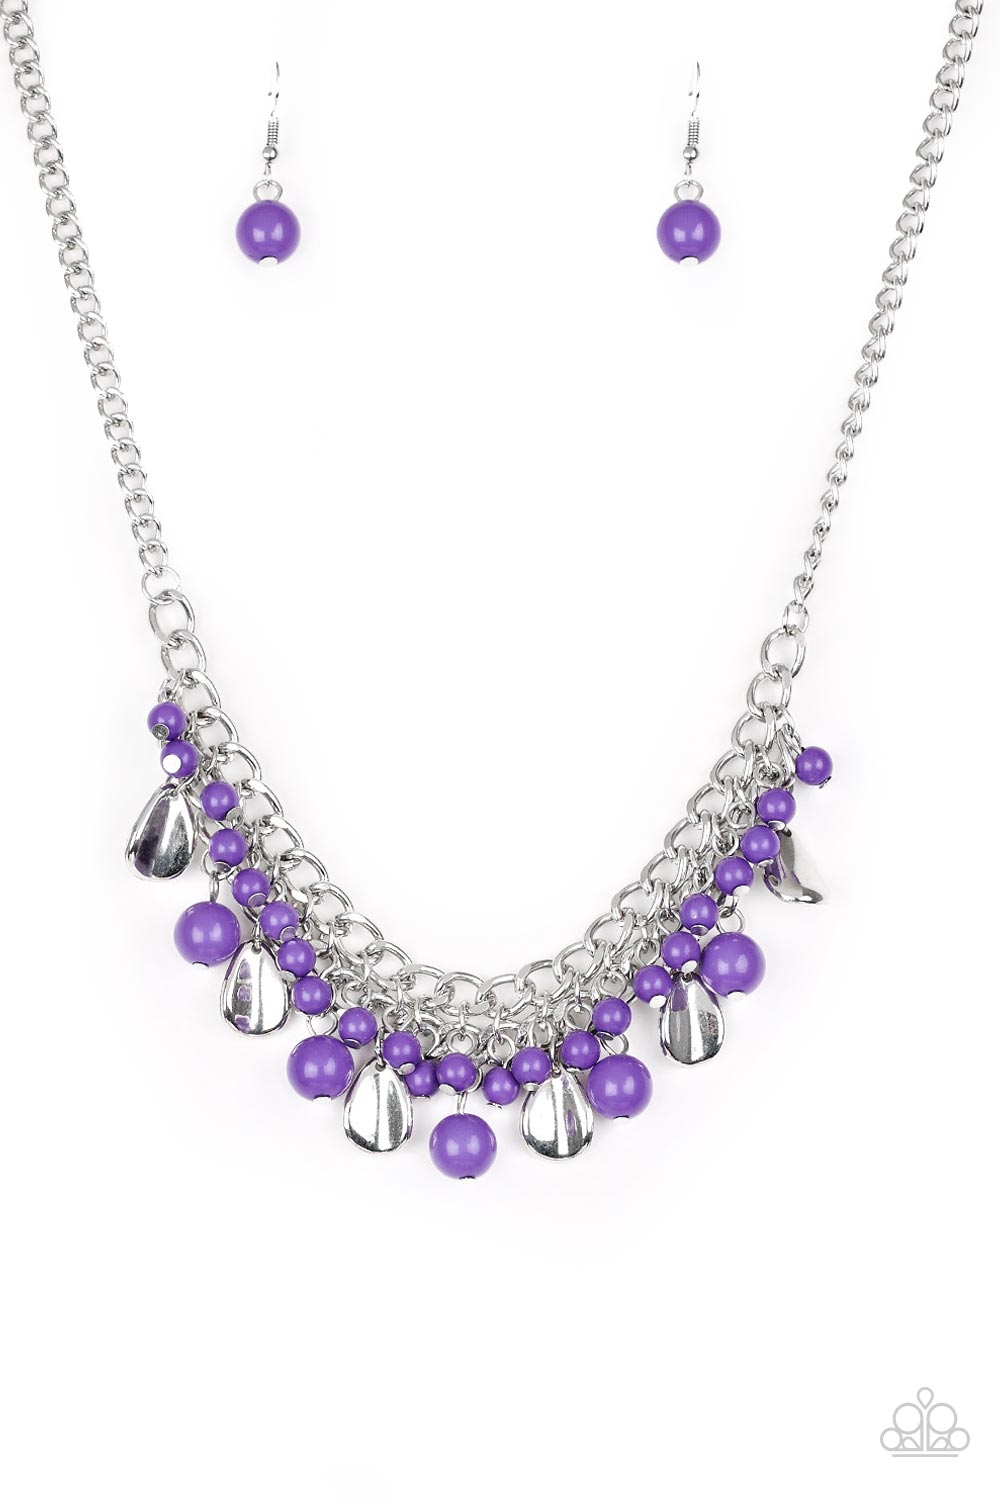 Summer Showdown - Purple Necklace freeshipping - JewLz4u Gemstone Gallery